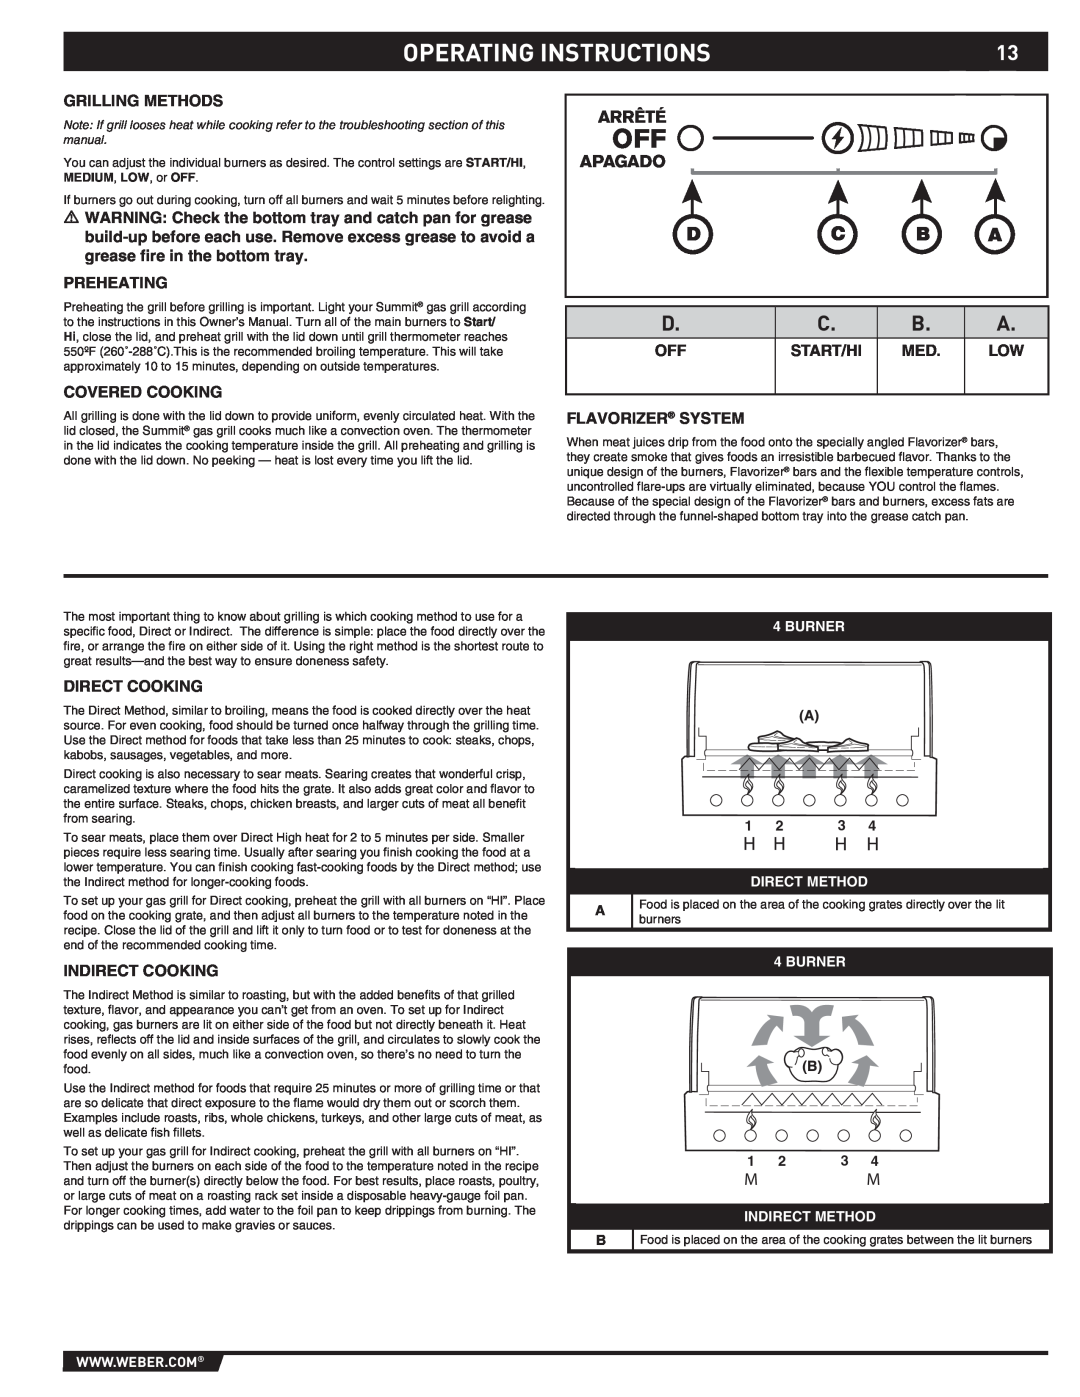 Weber S-470TM manual Operating Instructions, D C B A, Arrêté, Apagado 